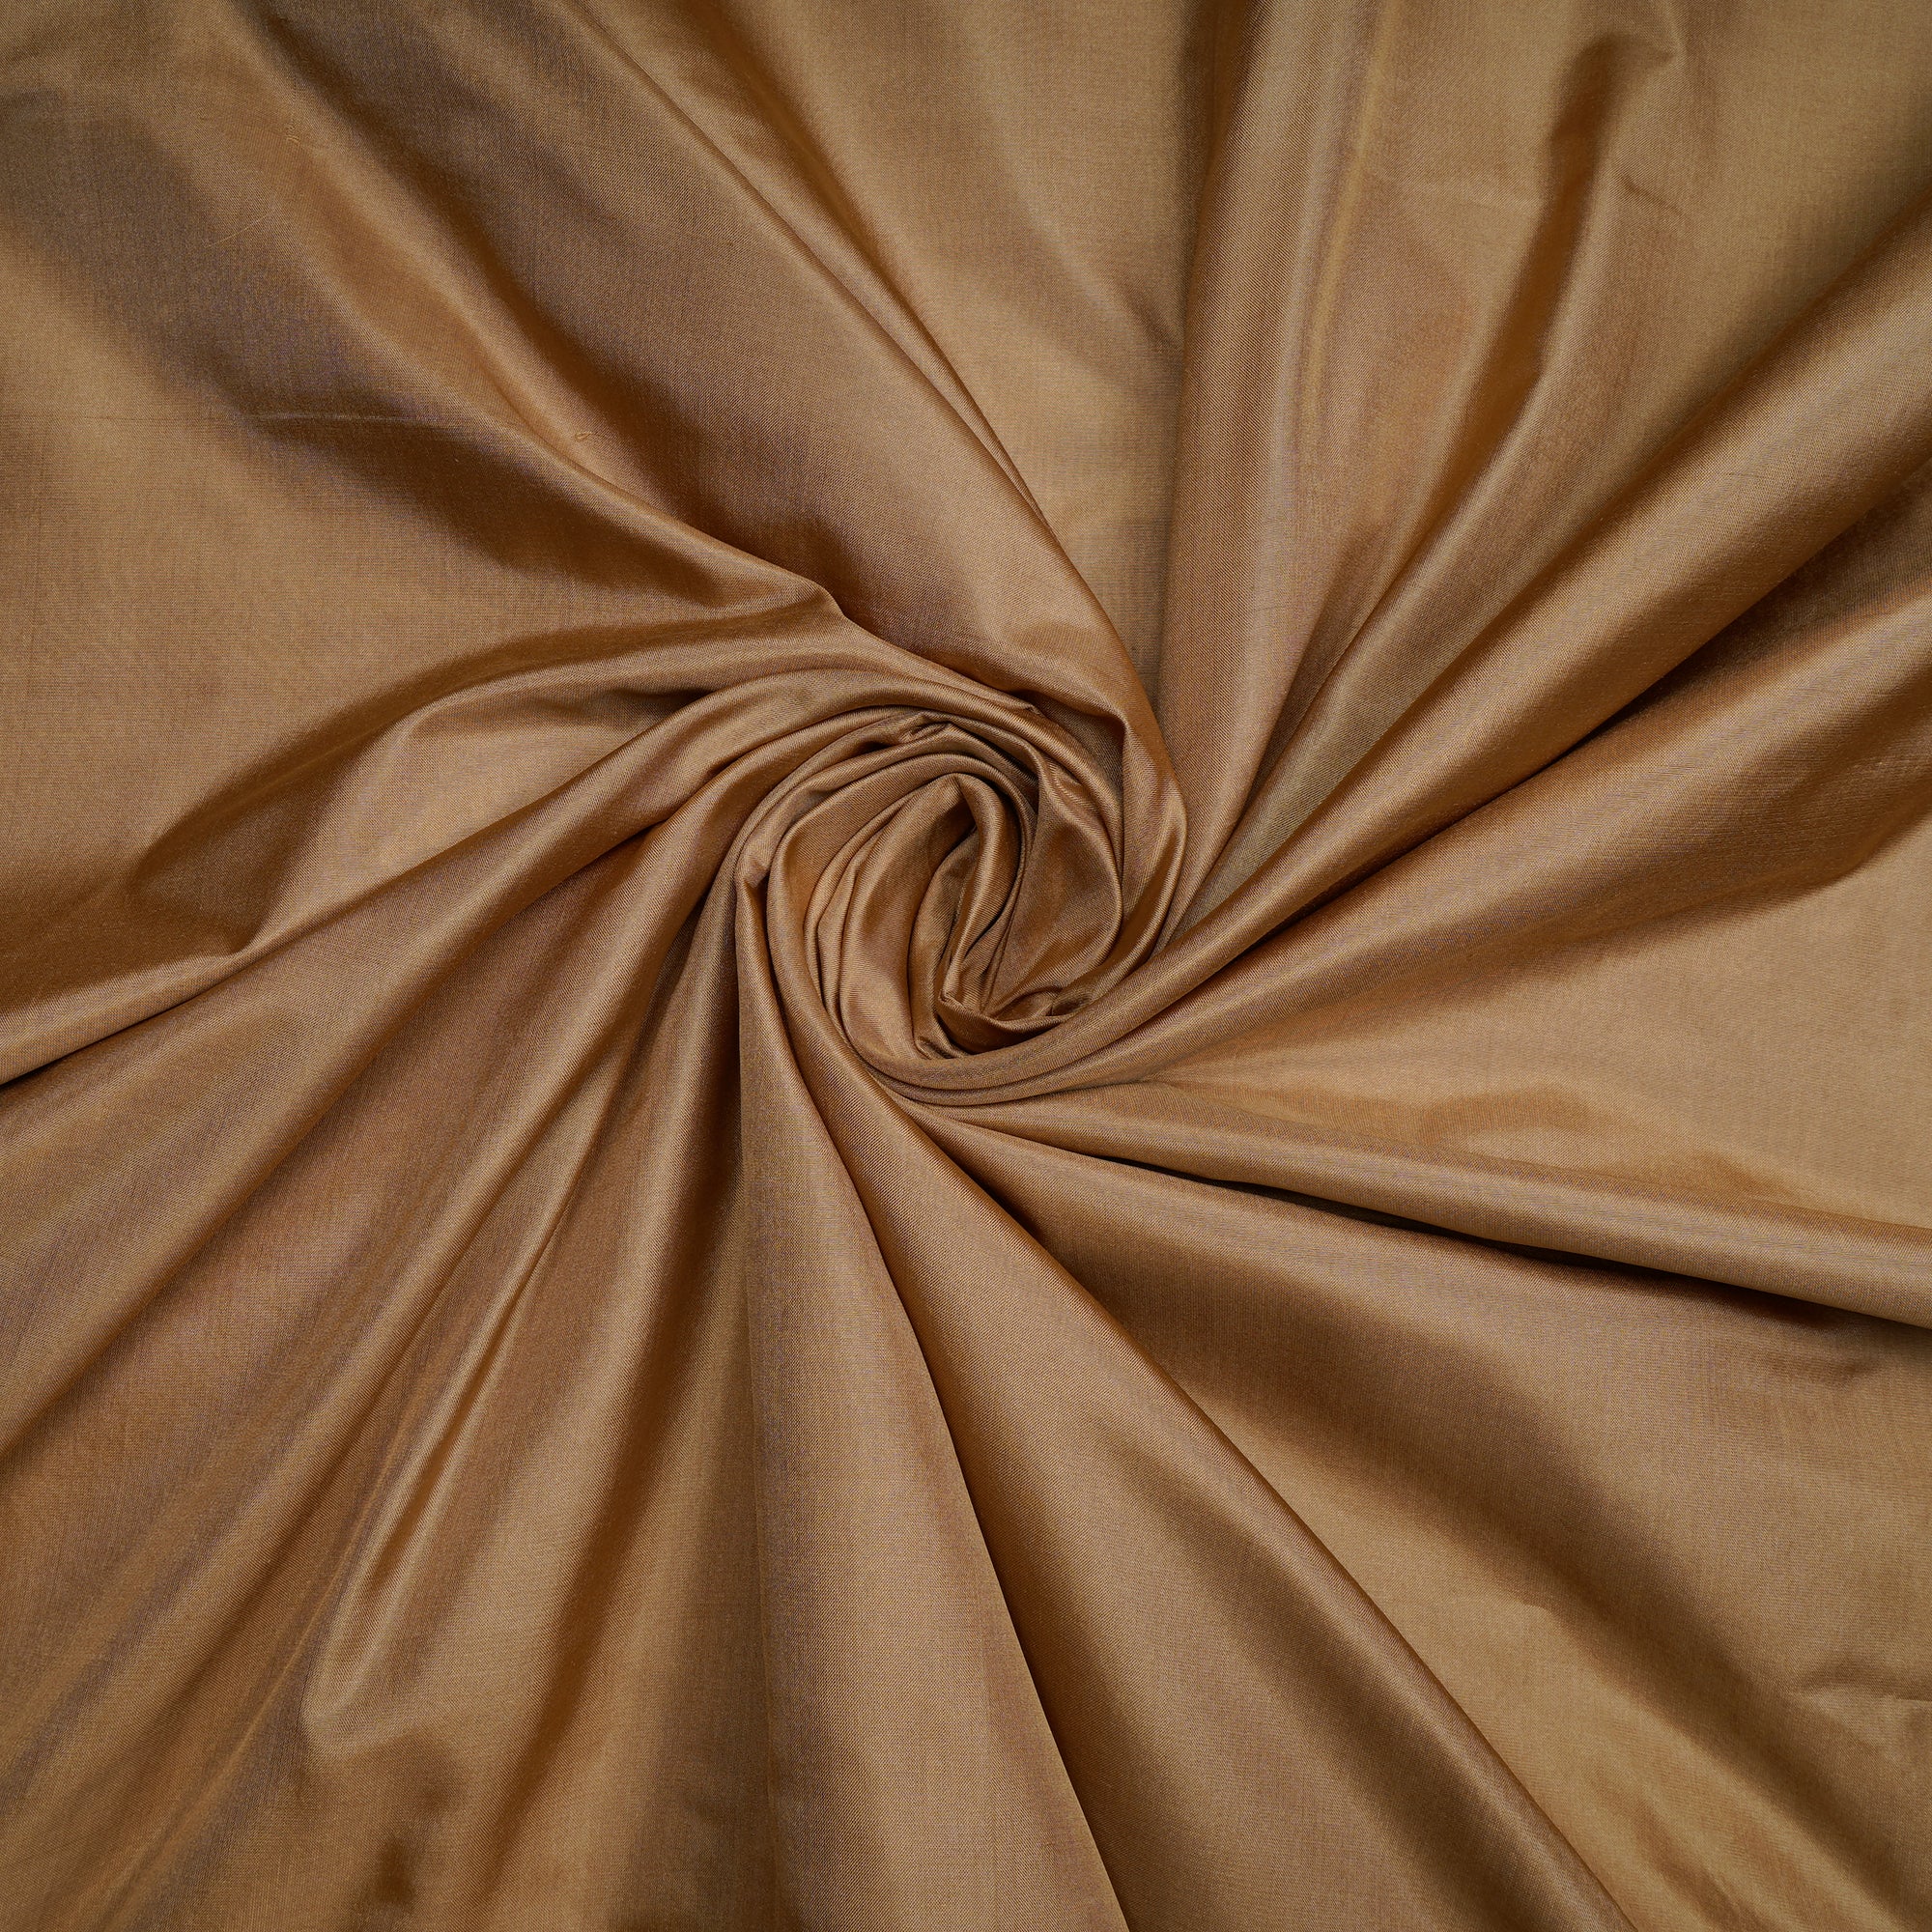 Curd & Whey Dyed Plain Bangalore Silk Fabric